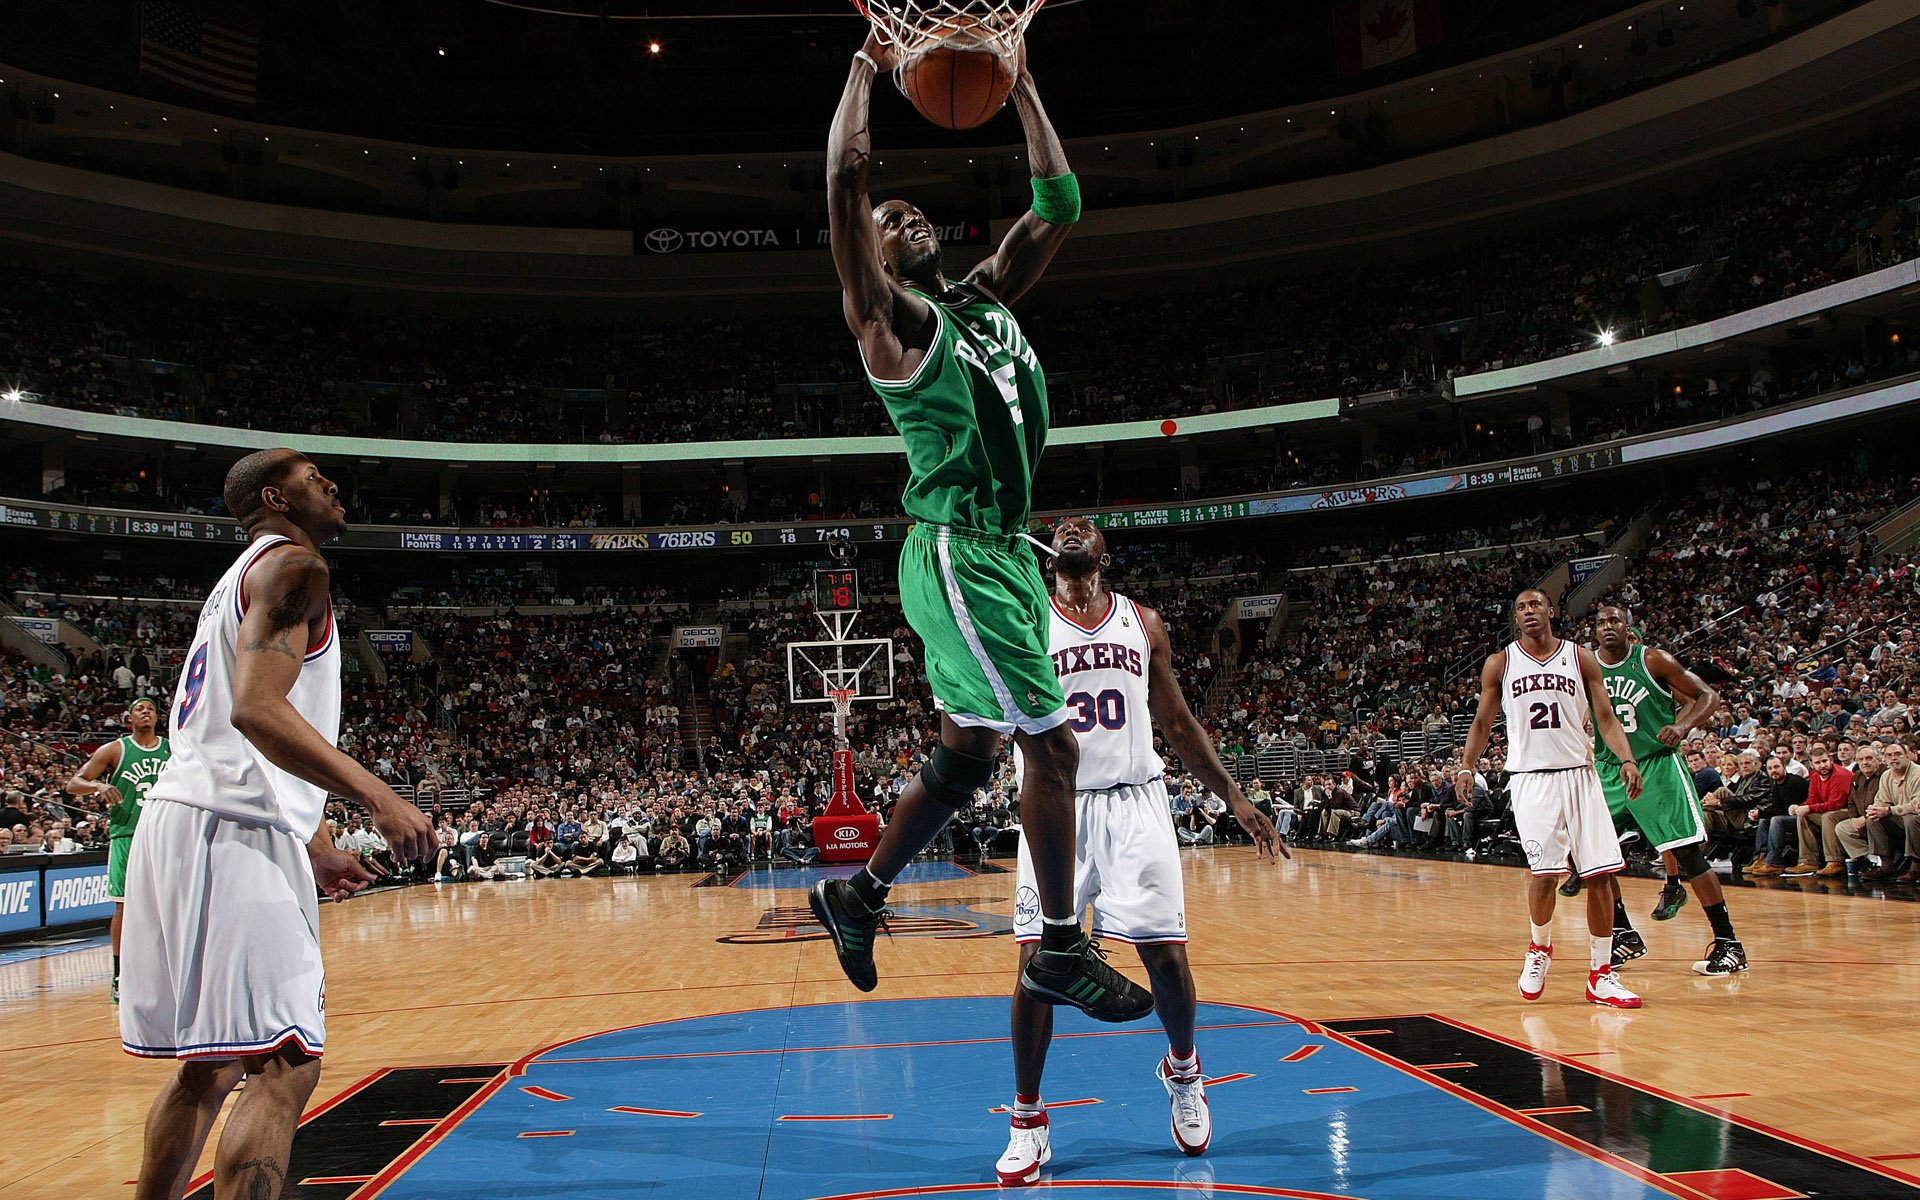 Kevin garnett - Boston Celtics foto (11301828) - fanpop